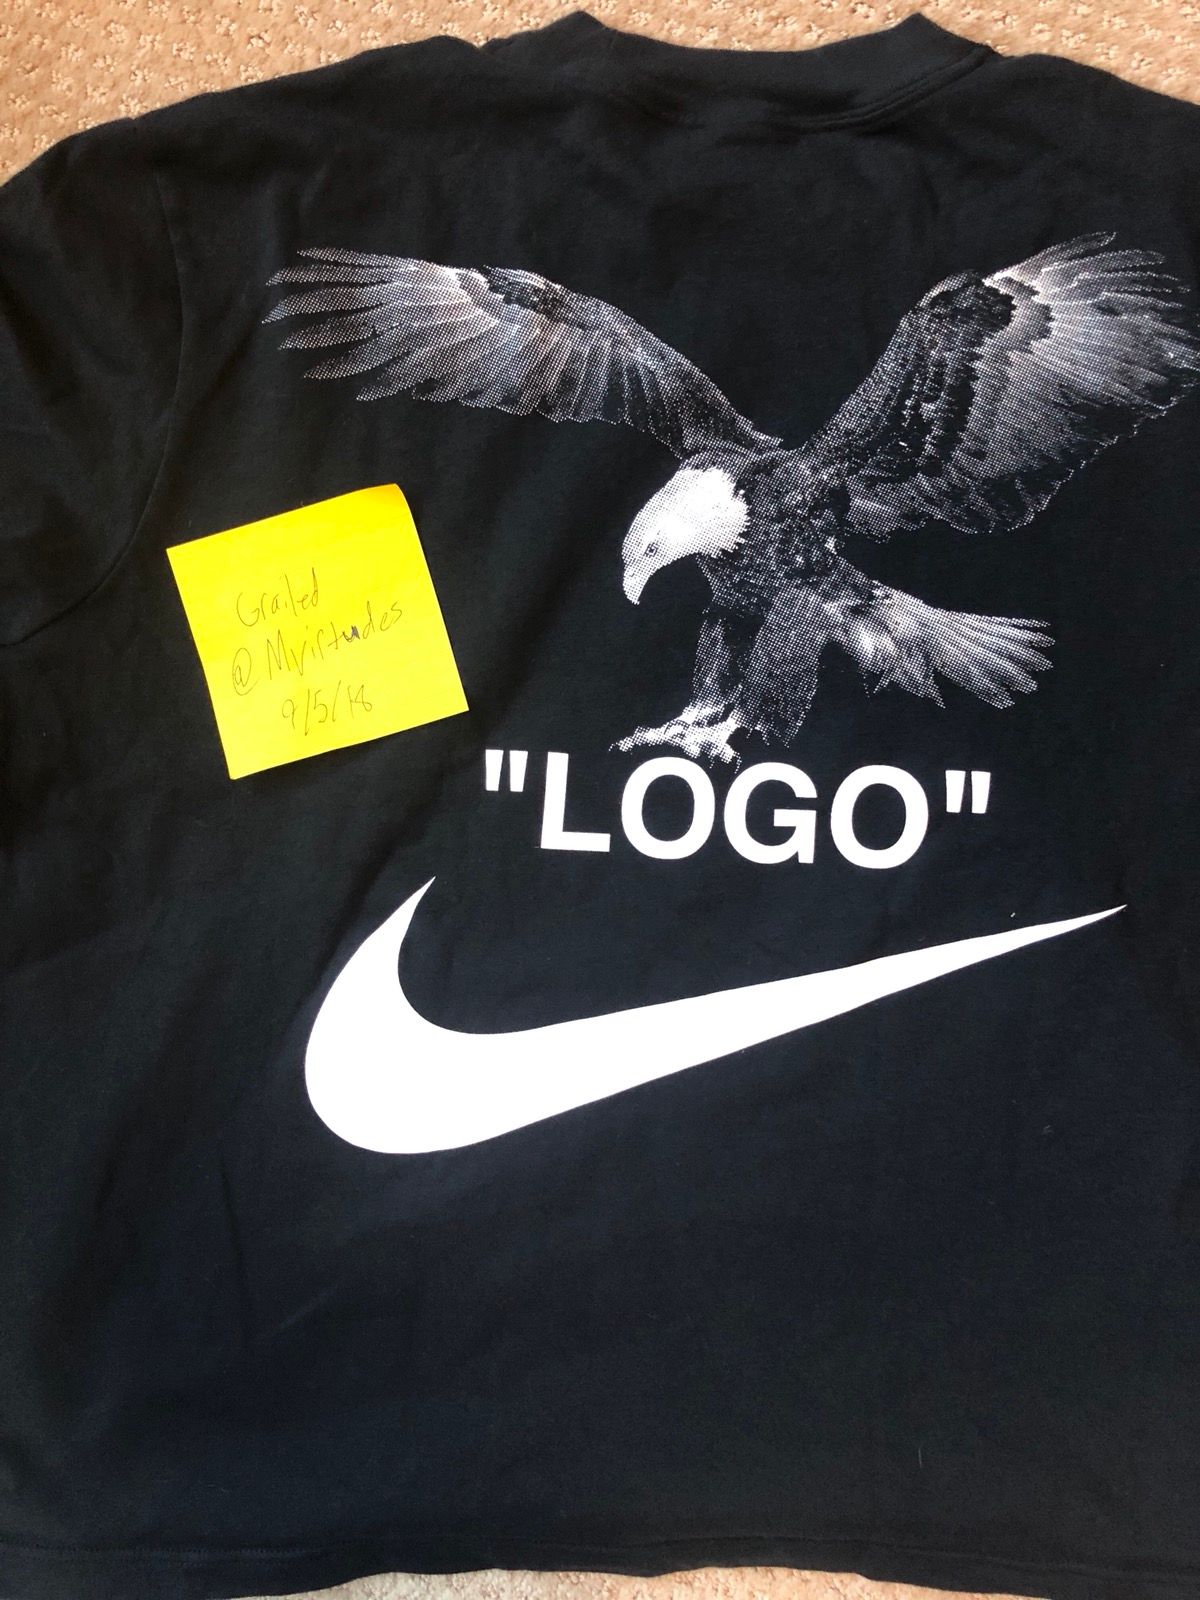 Nike Nike x Off-White Mercurial NRG Soccer tee Shirt Size US L / EU 52-54 / 3 - 4 Thumbnail